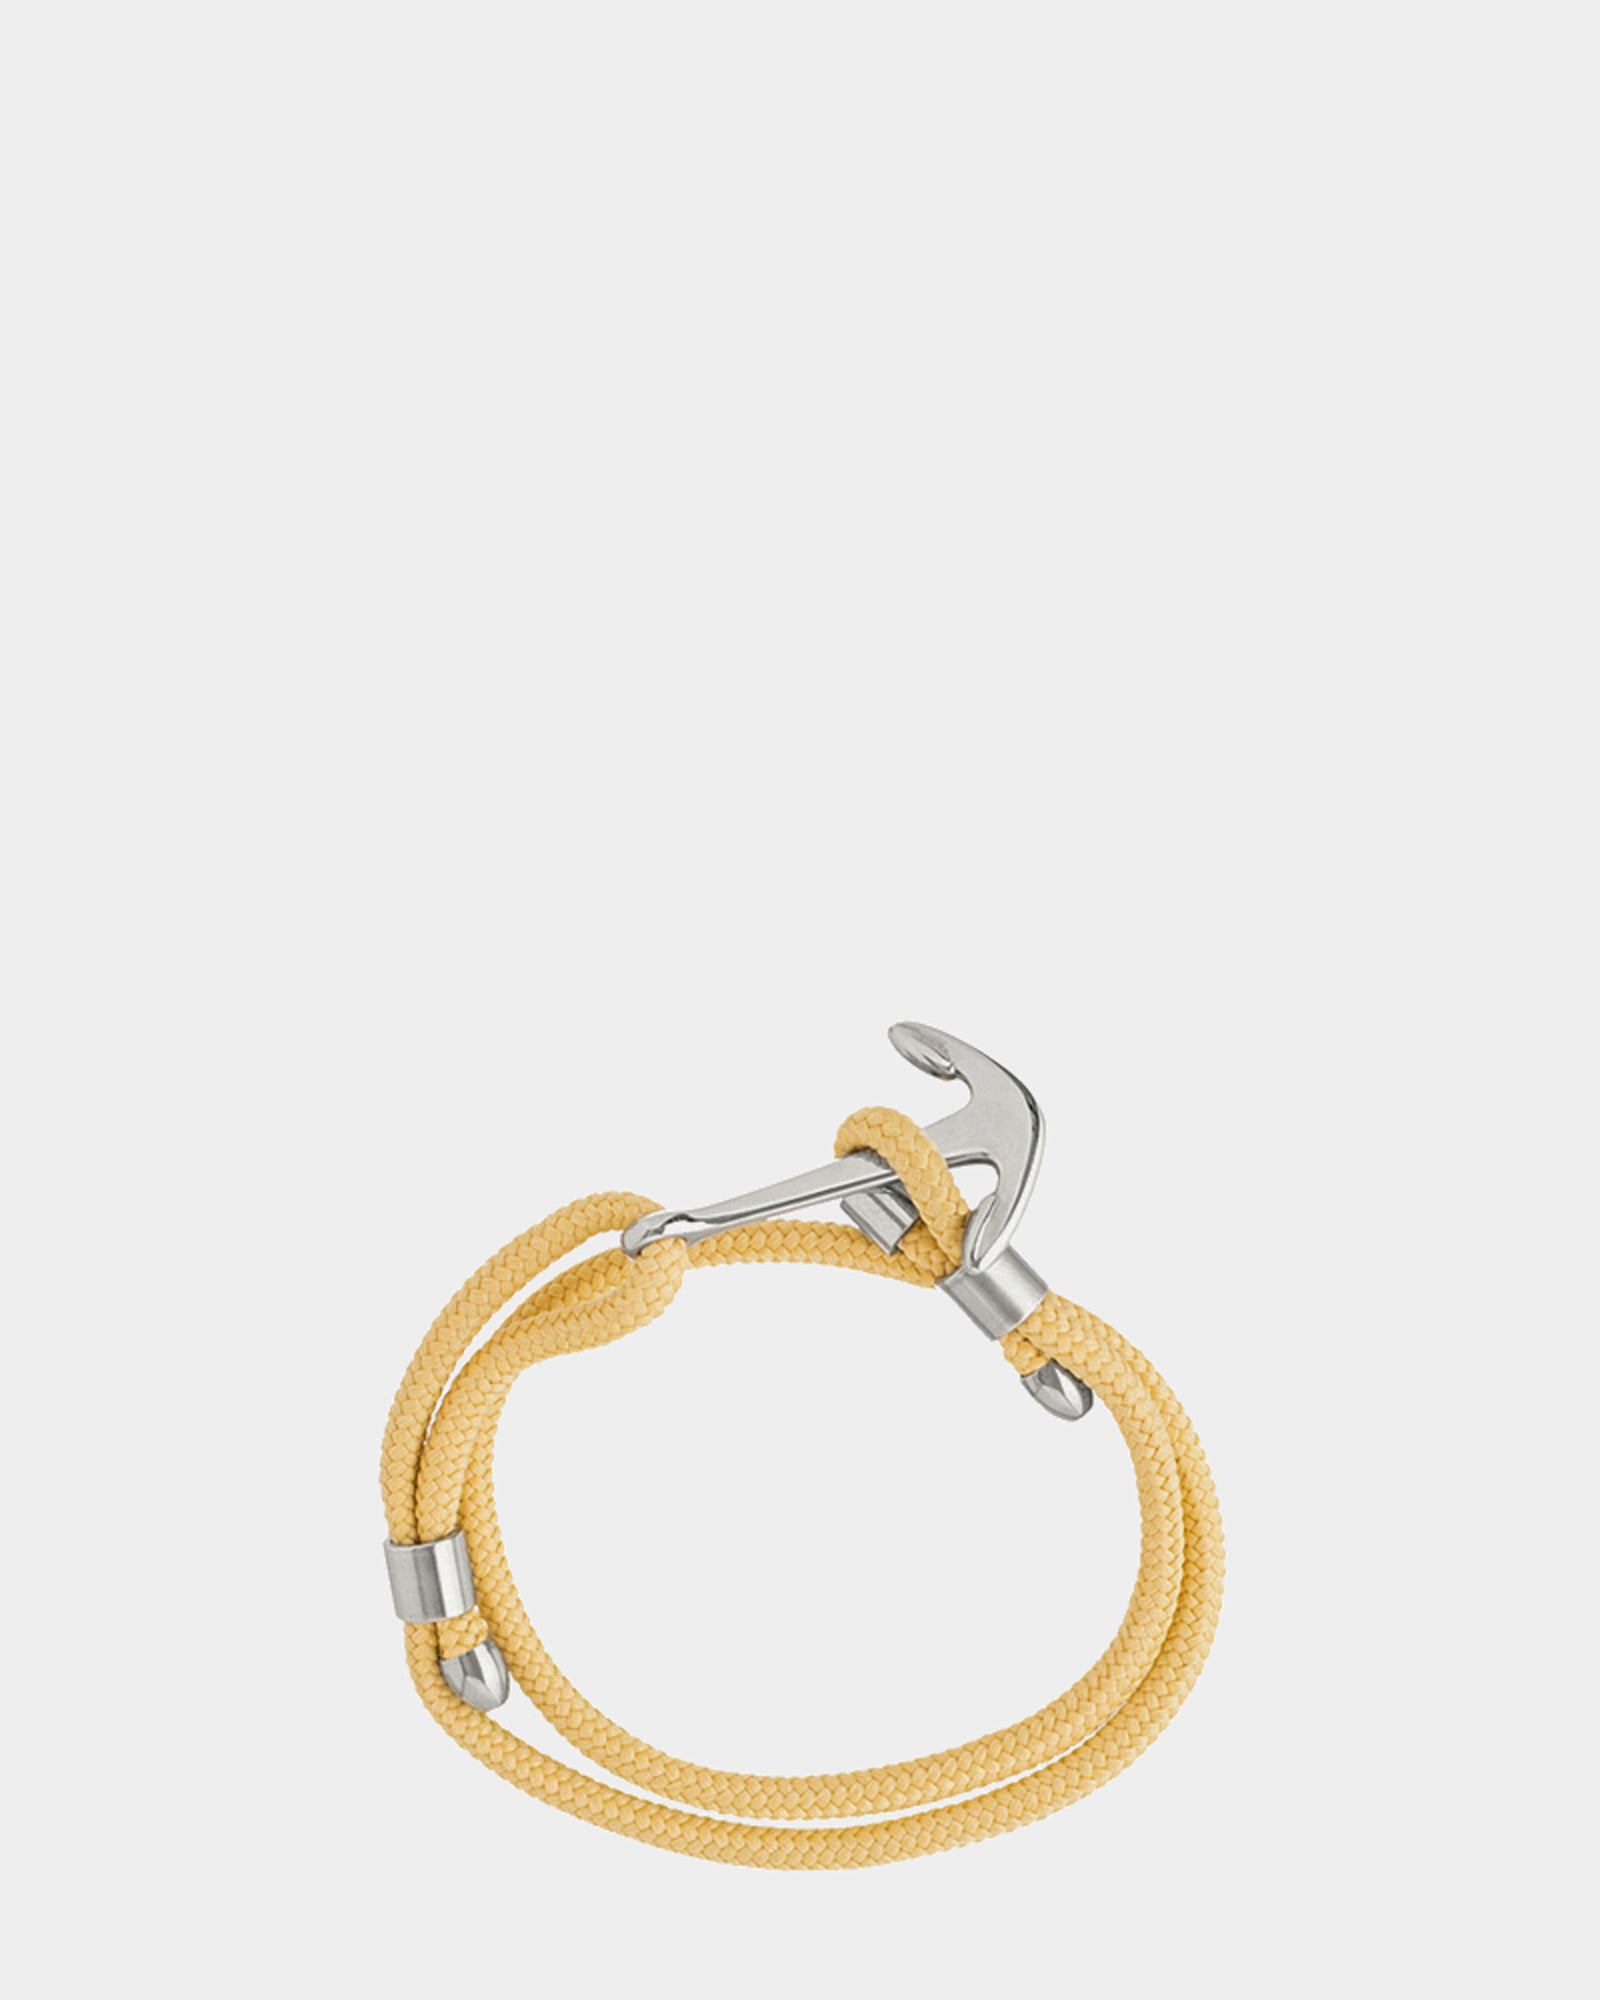 Beige 'Anchor' Bracelet with anchor pendant - Nautical Bracelets - Online Jewelry - Dicci